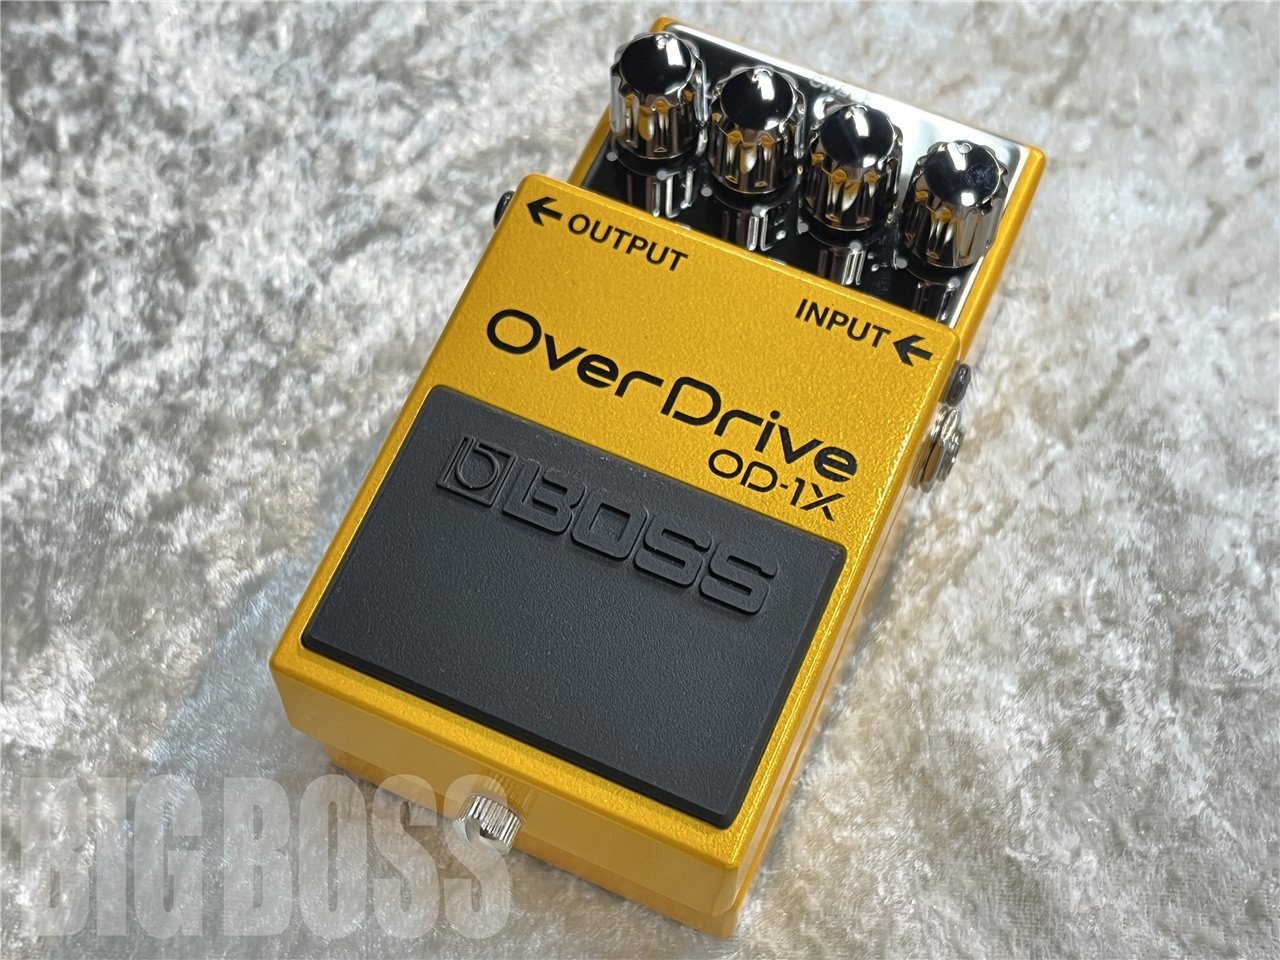 BOSS OD-1X OverDrive